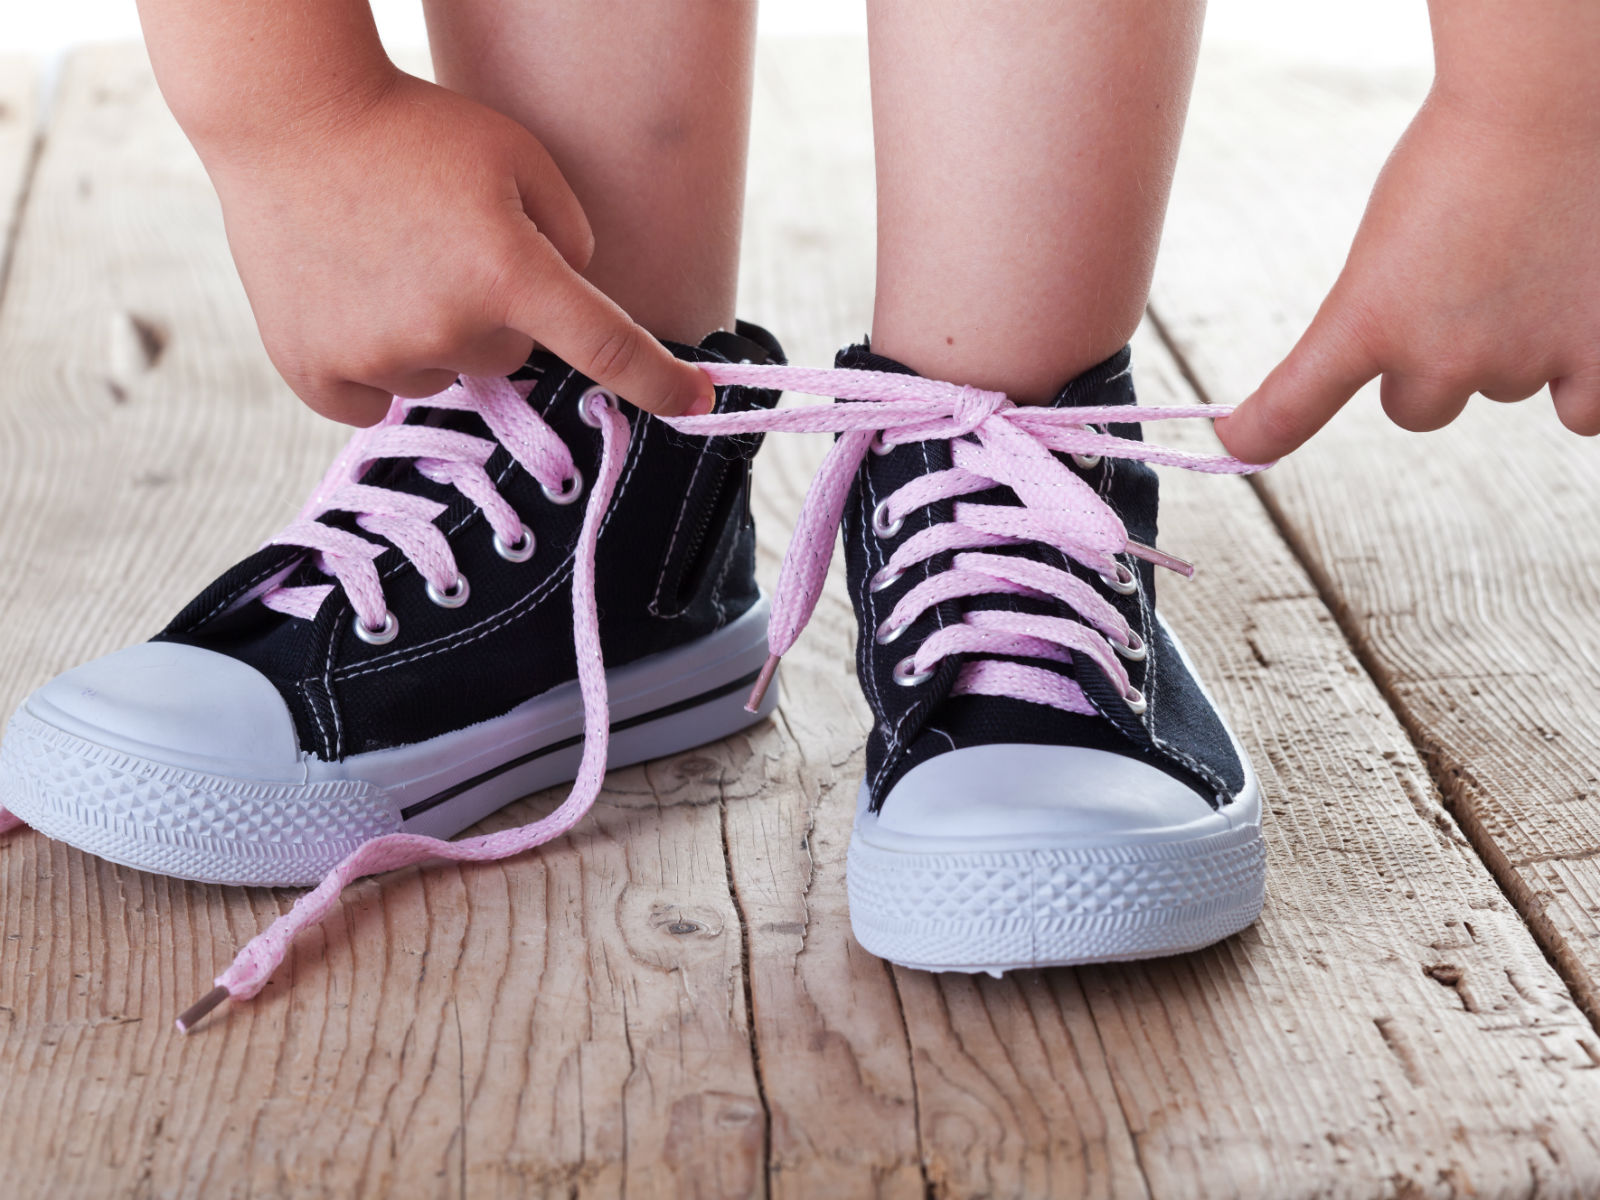 teaching kids to tie their shoelaces 